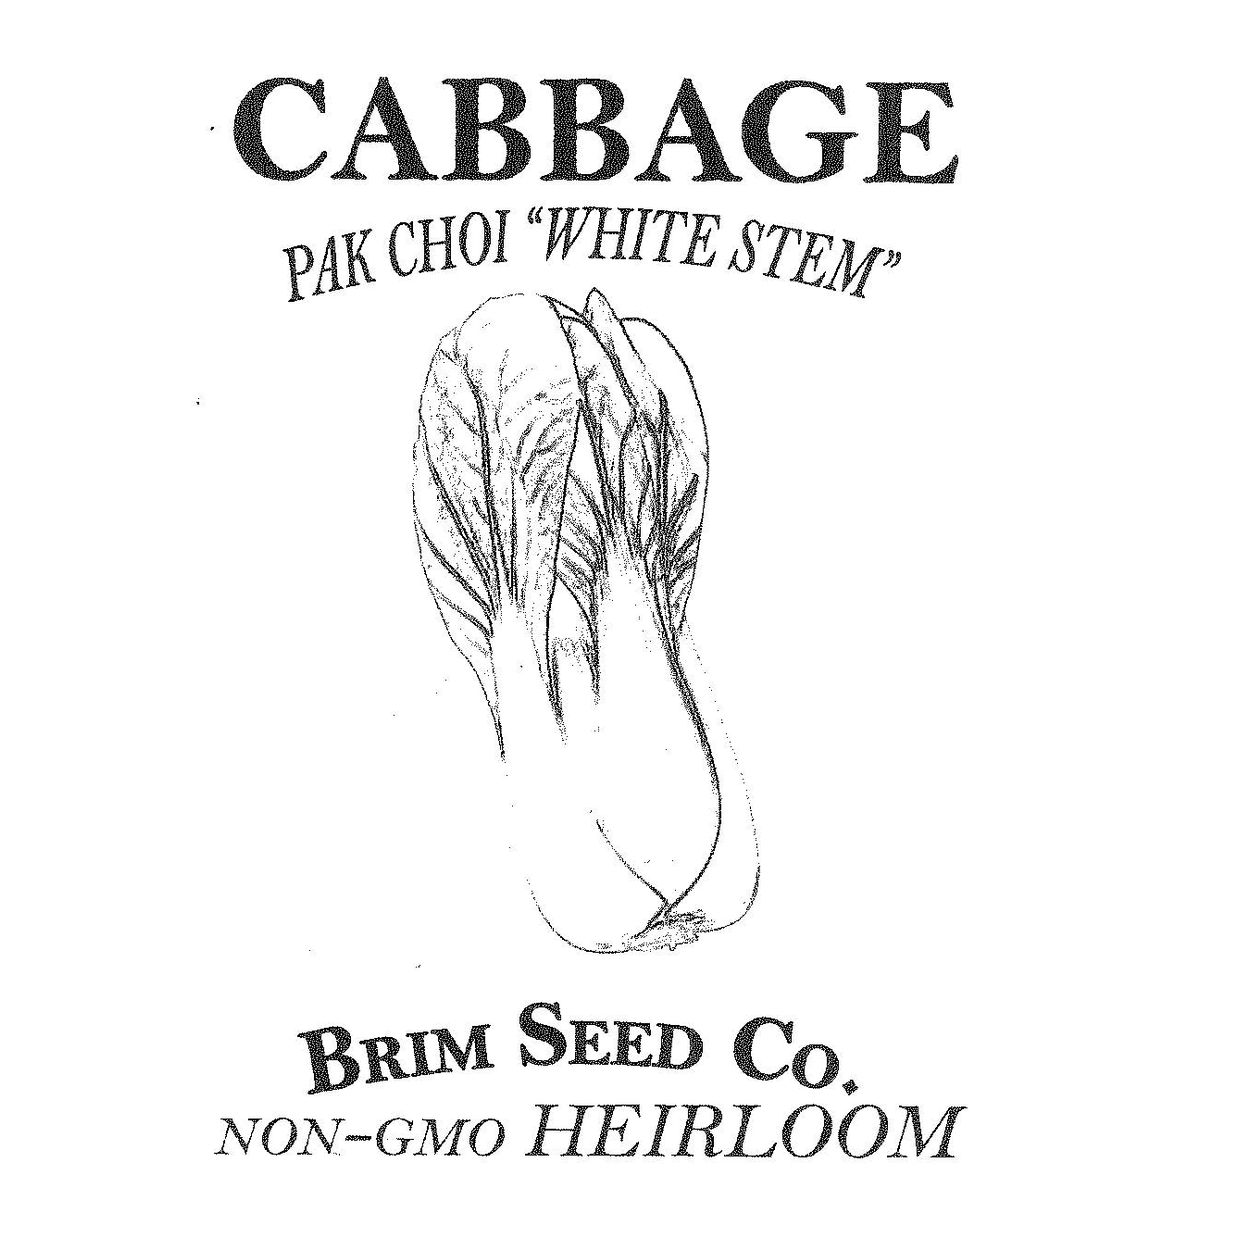 Brim Seed Co. - Pak Choi White Stem Cabbage Heirloom Seed